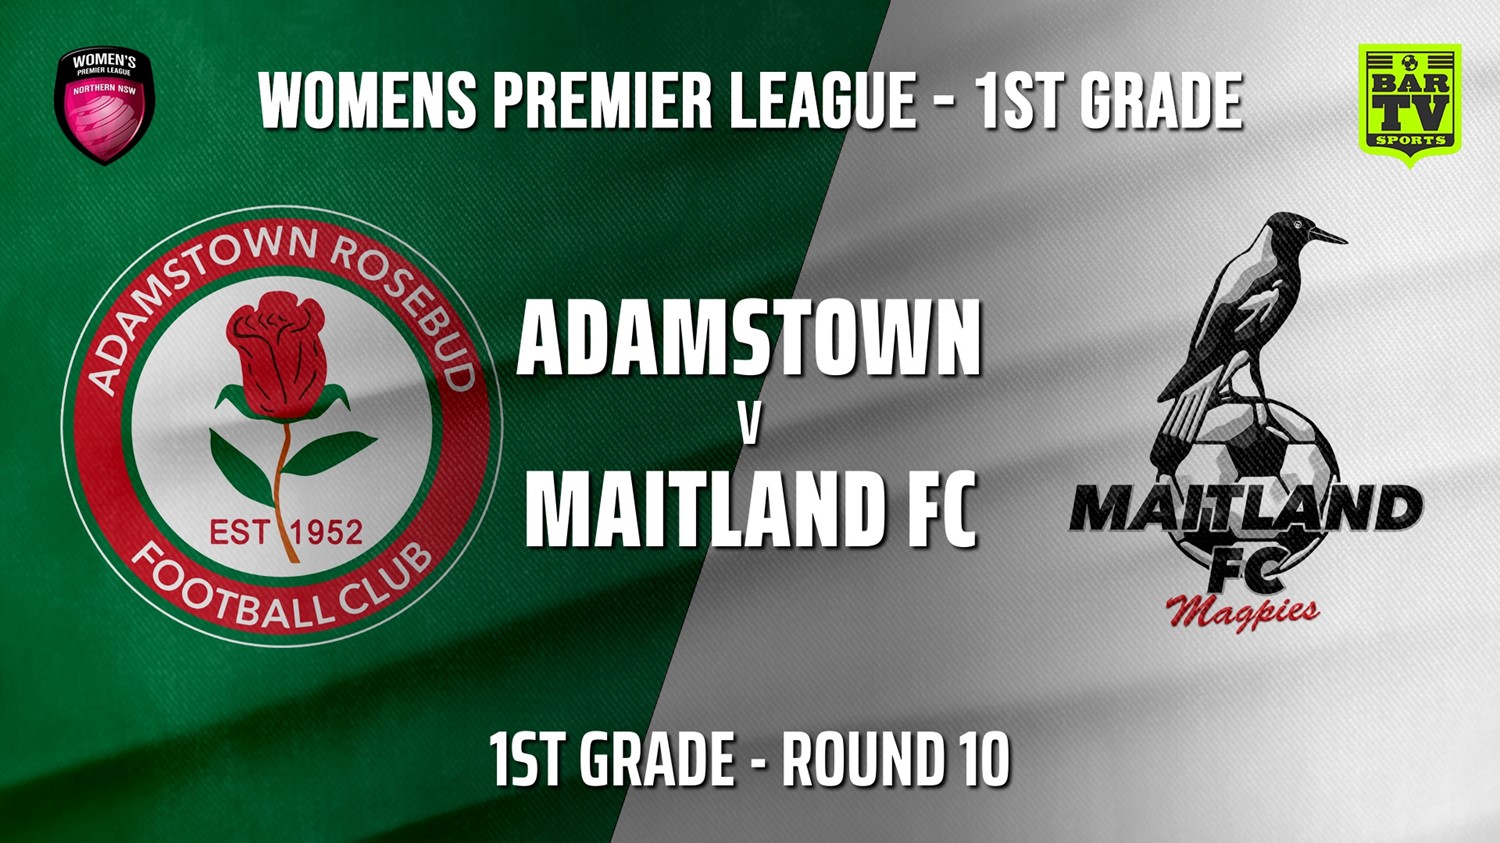 210606-Herald Women’s Premier League Round 10 - 1st Grade - Adamstown Women v Maitland FC (women) Minigame Slate Image